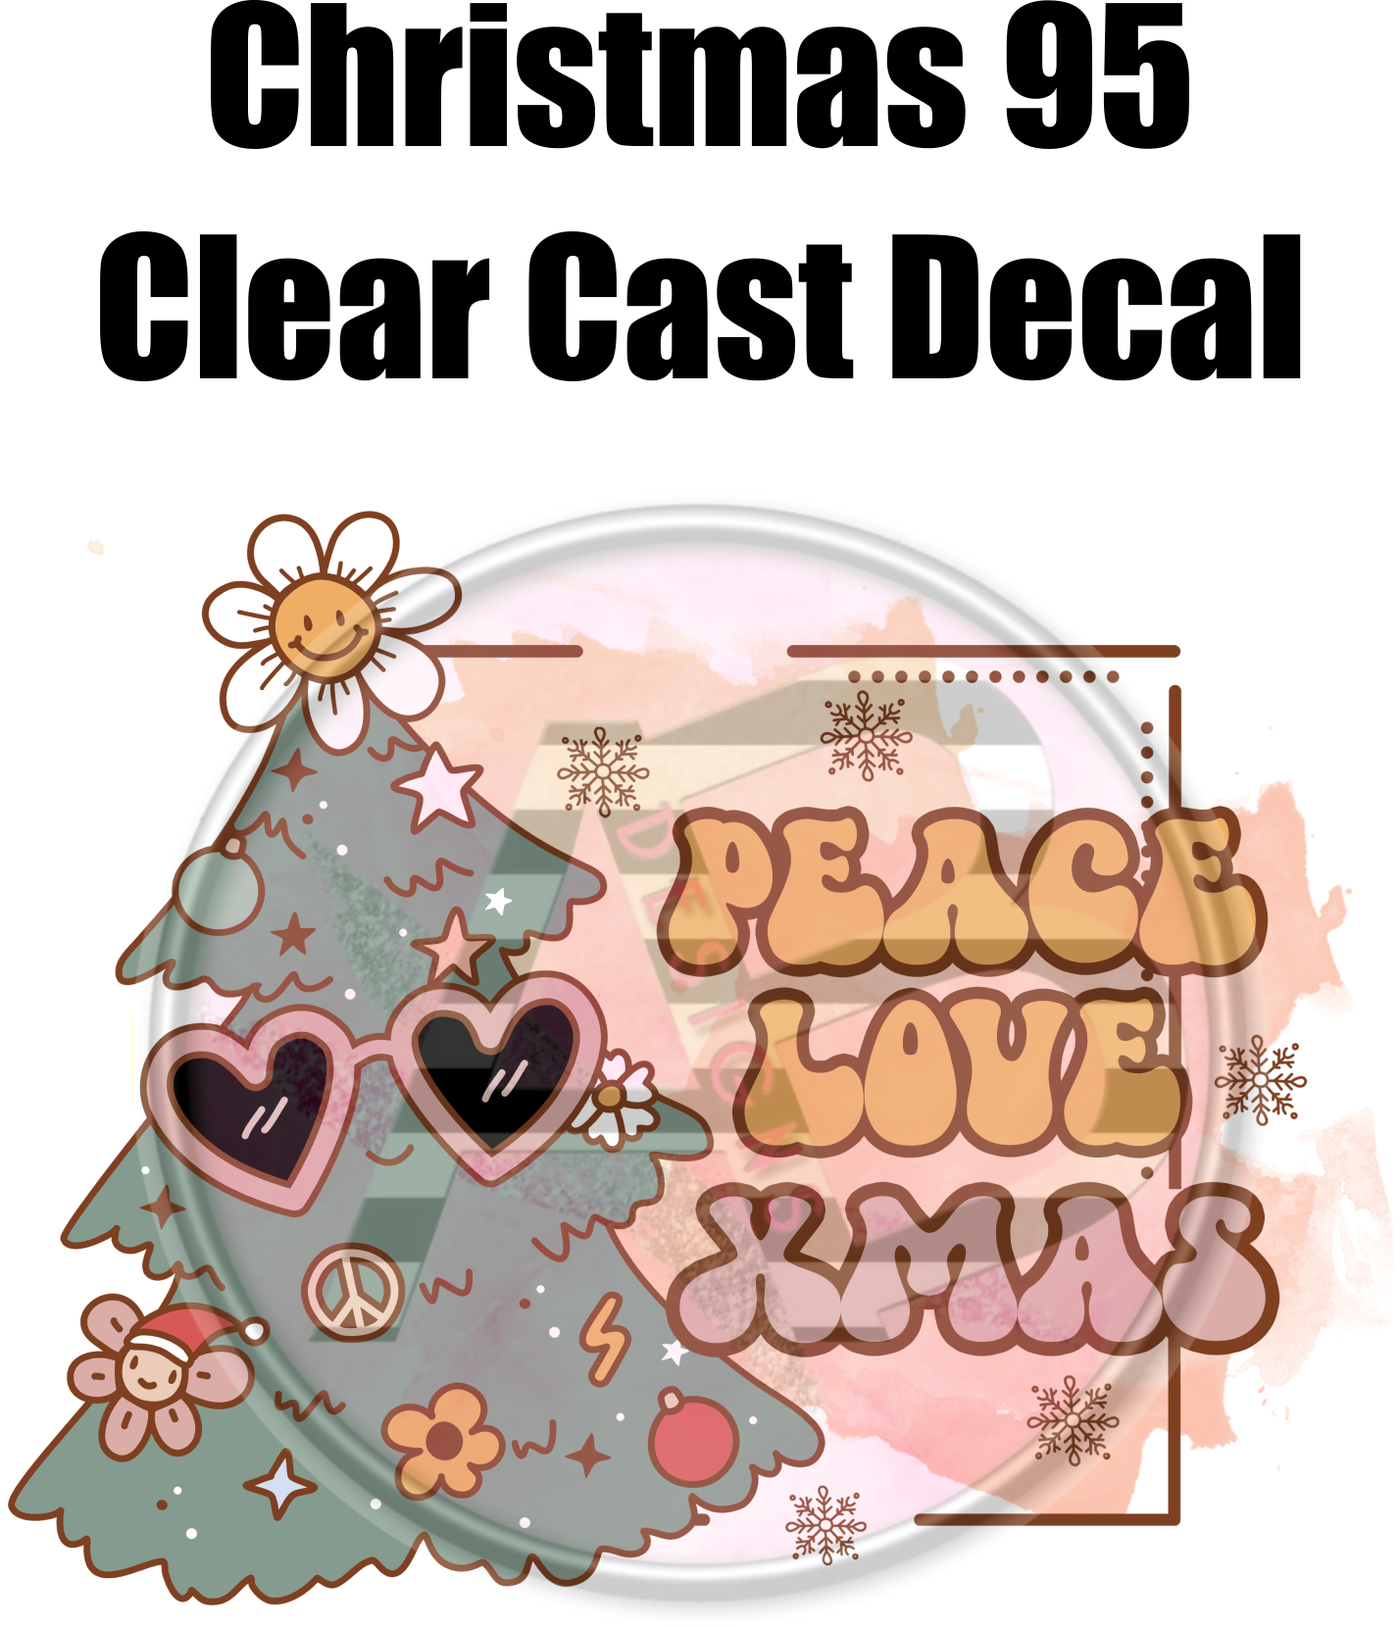 Christmas 95 - Clear Cast Decal